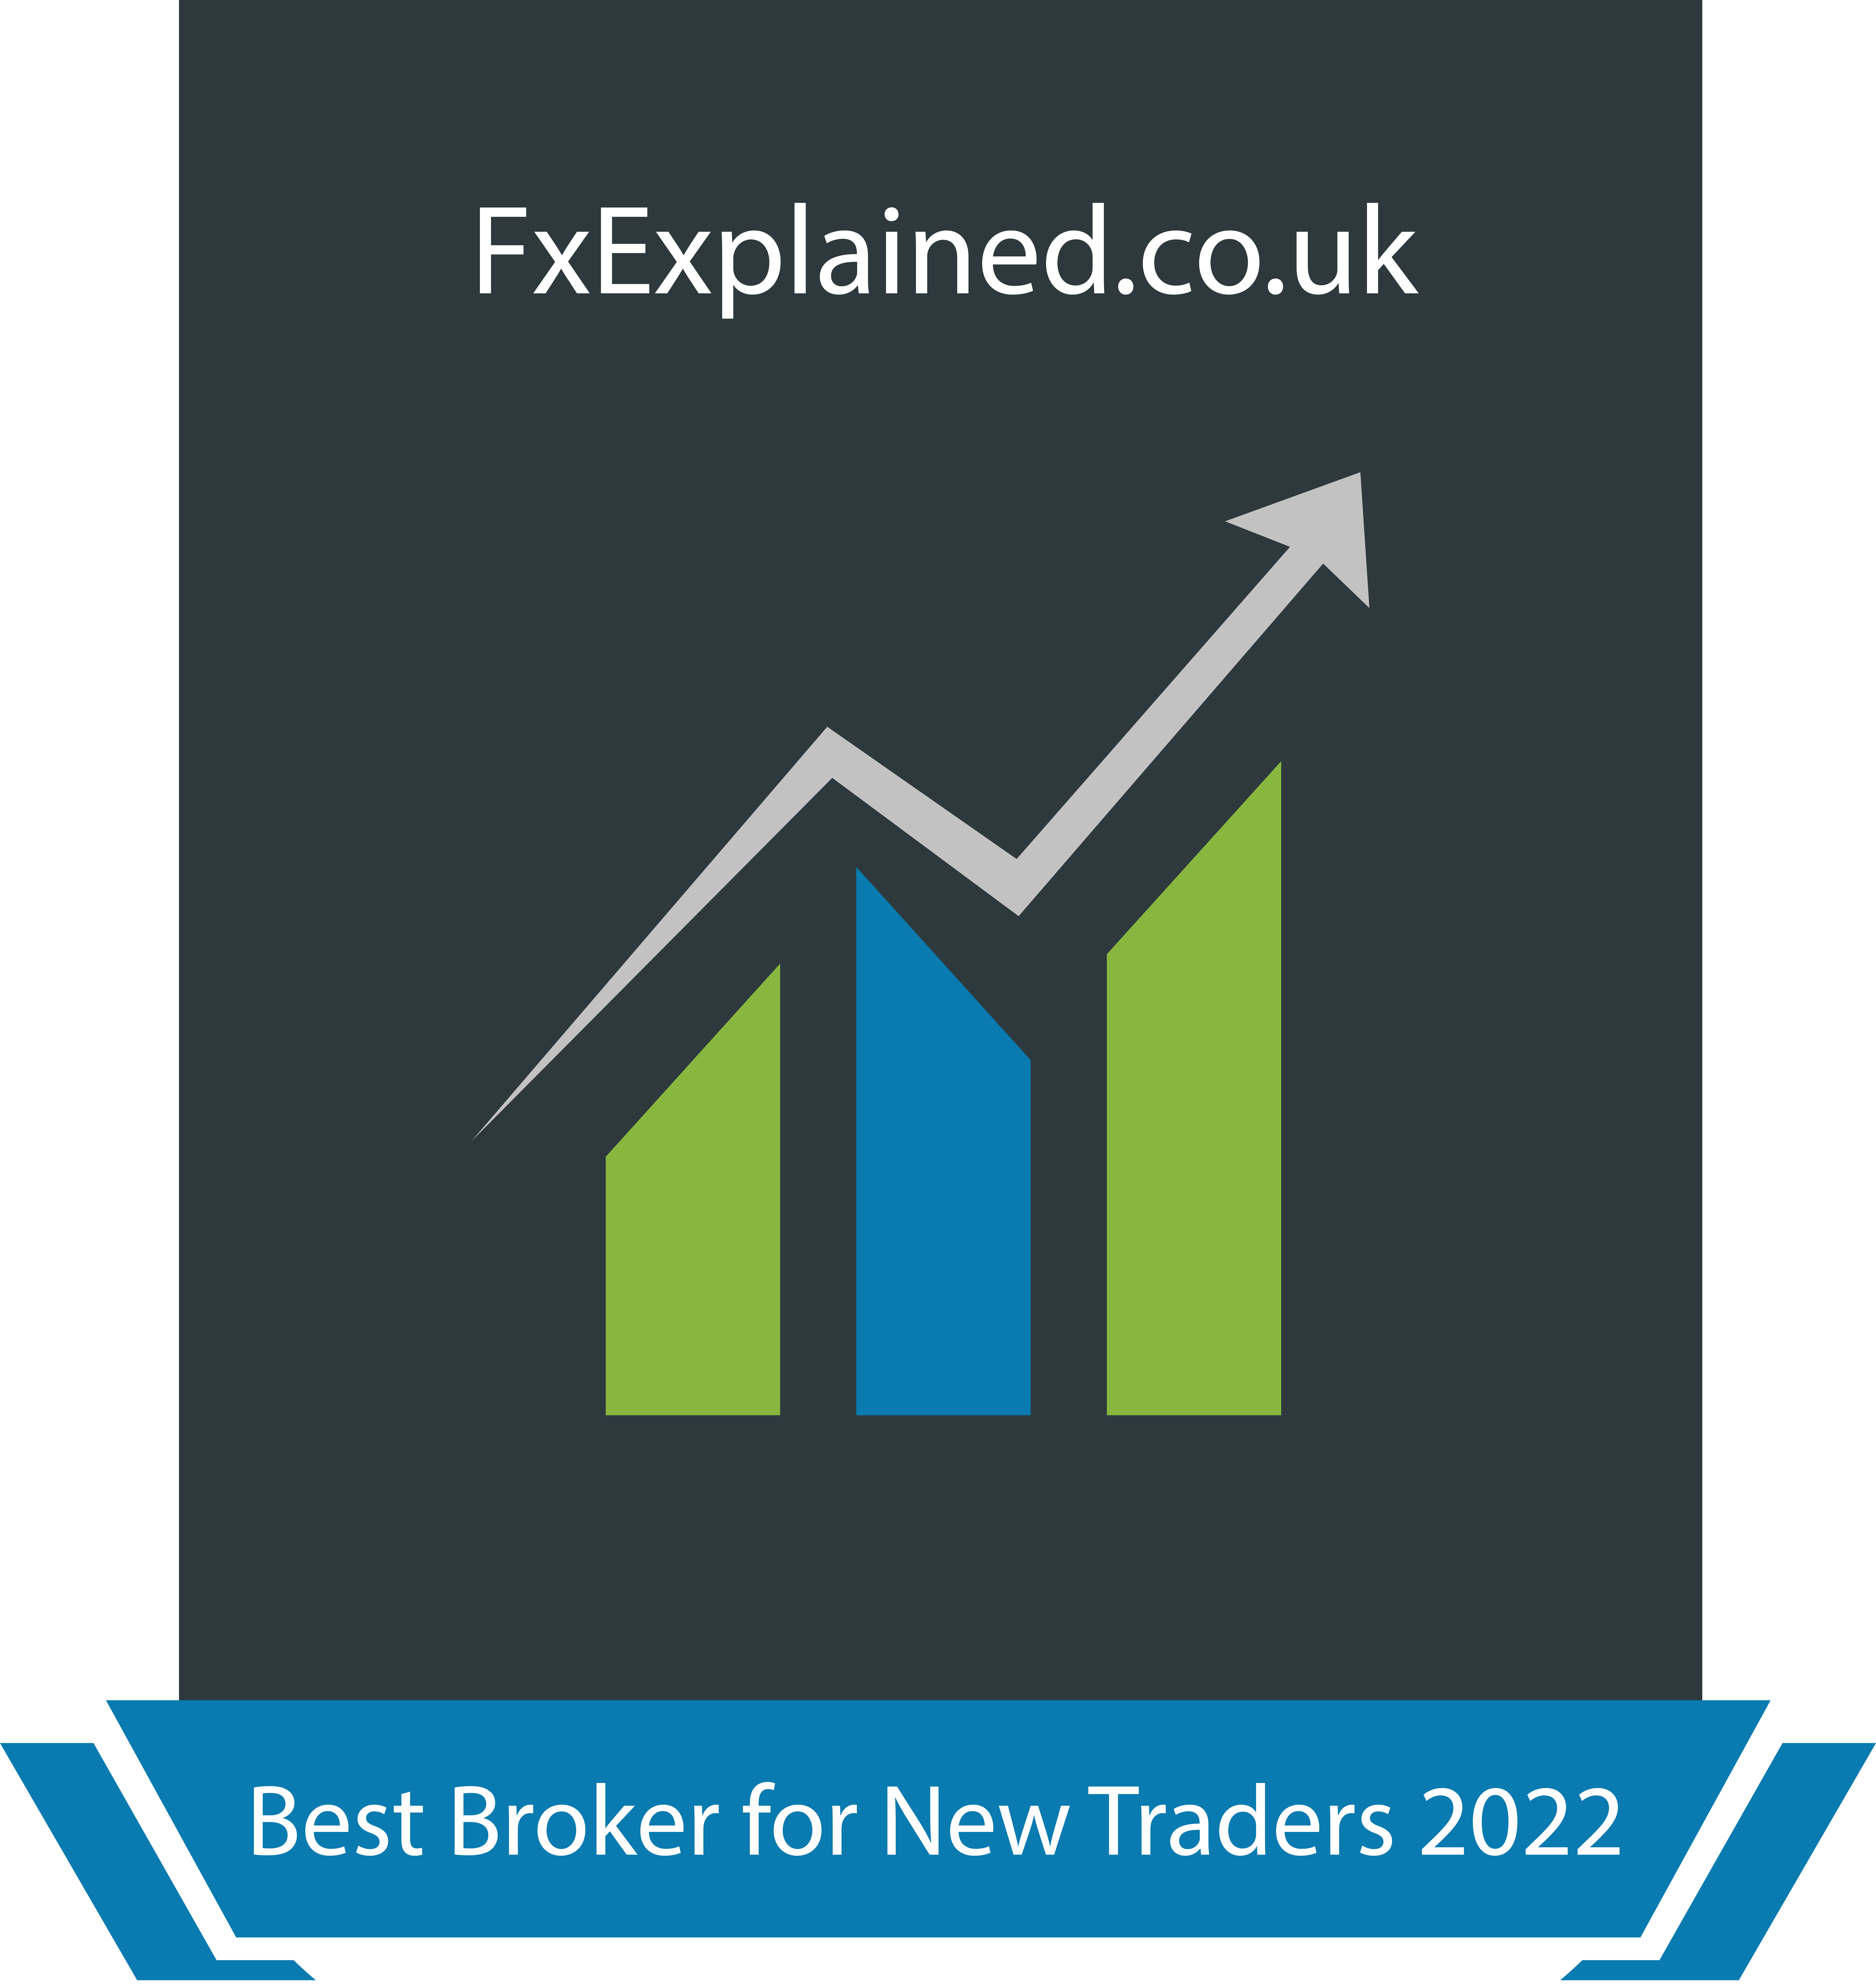 Best Broker for New Traders 2022